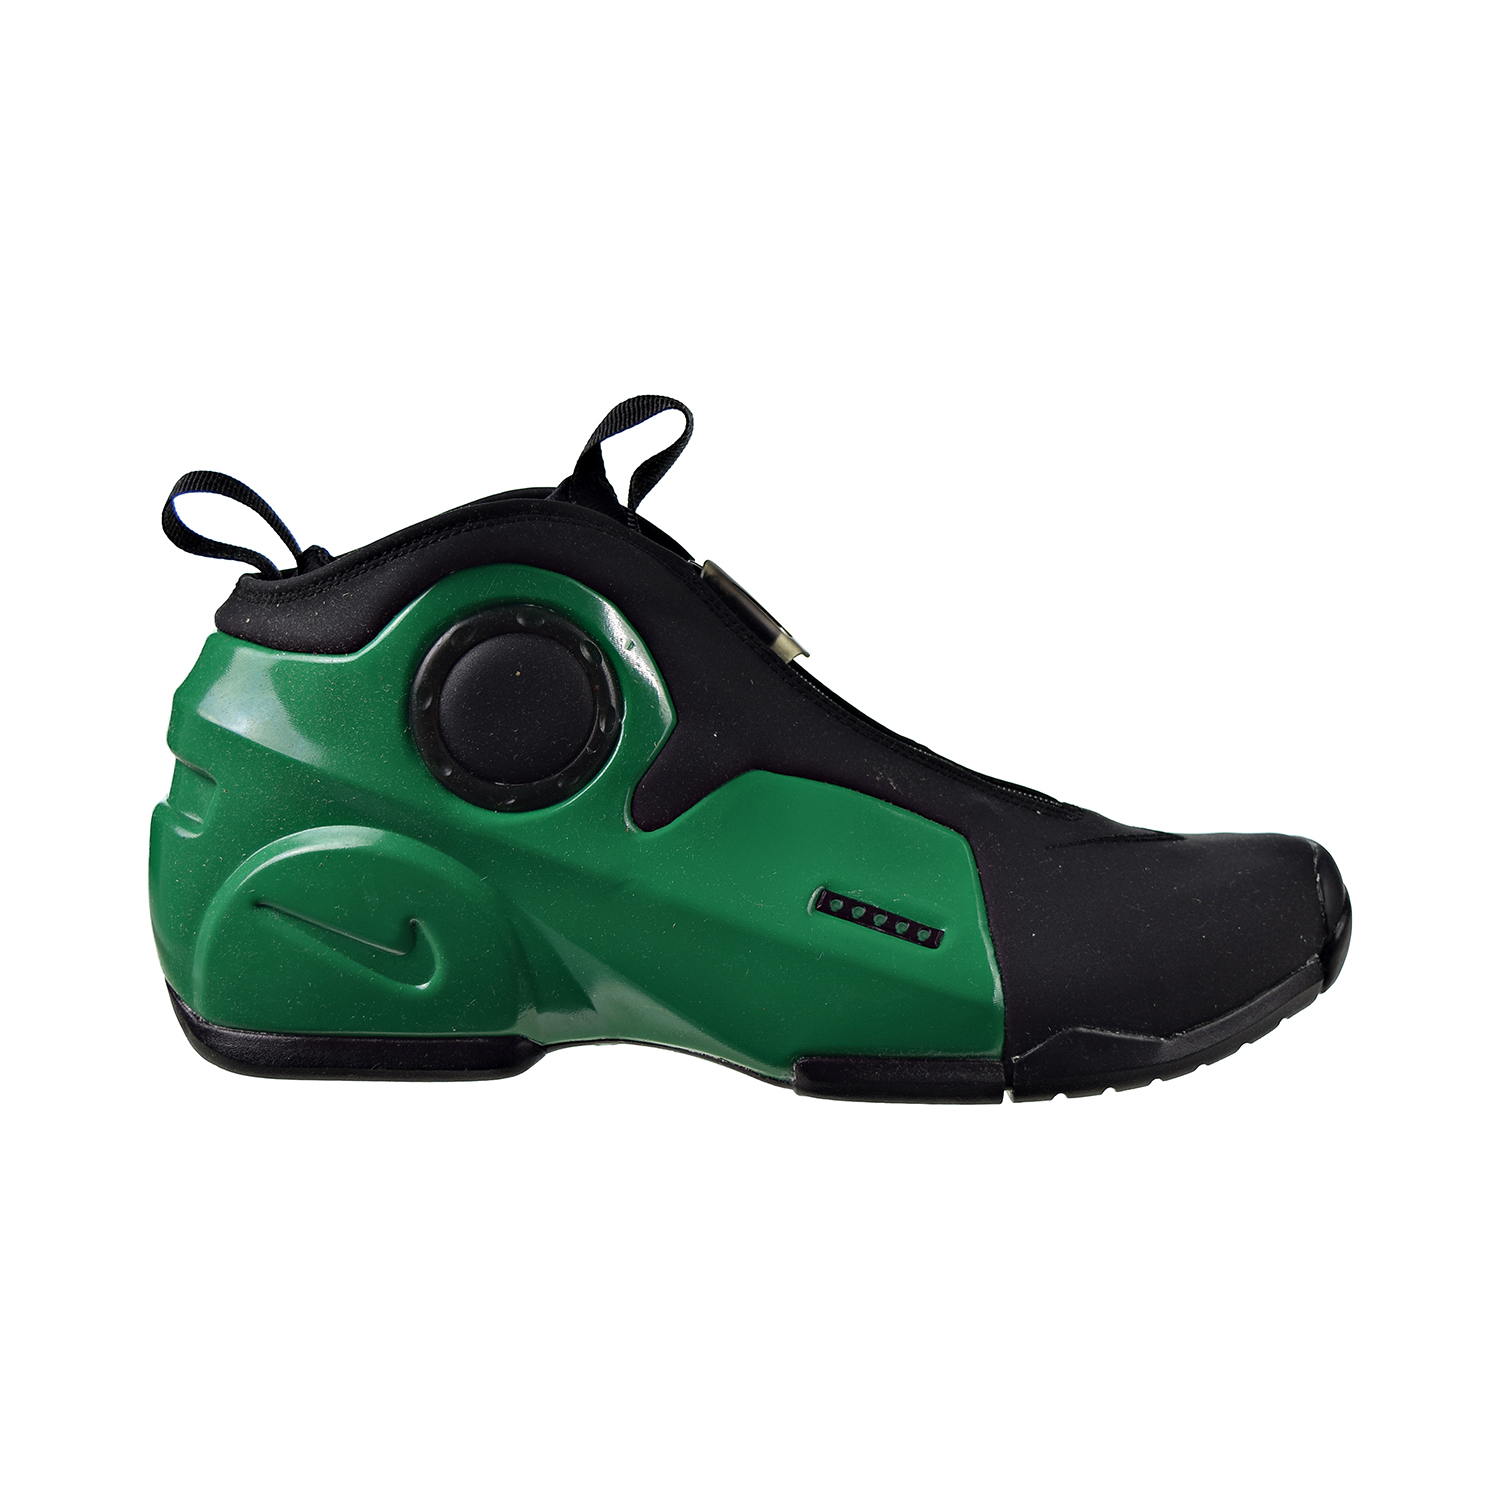 Nike Air Flightposite 2 Men's Basketball Shoes Black-Clover cd7399-001 - image 1 of 6